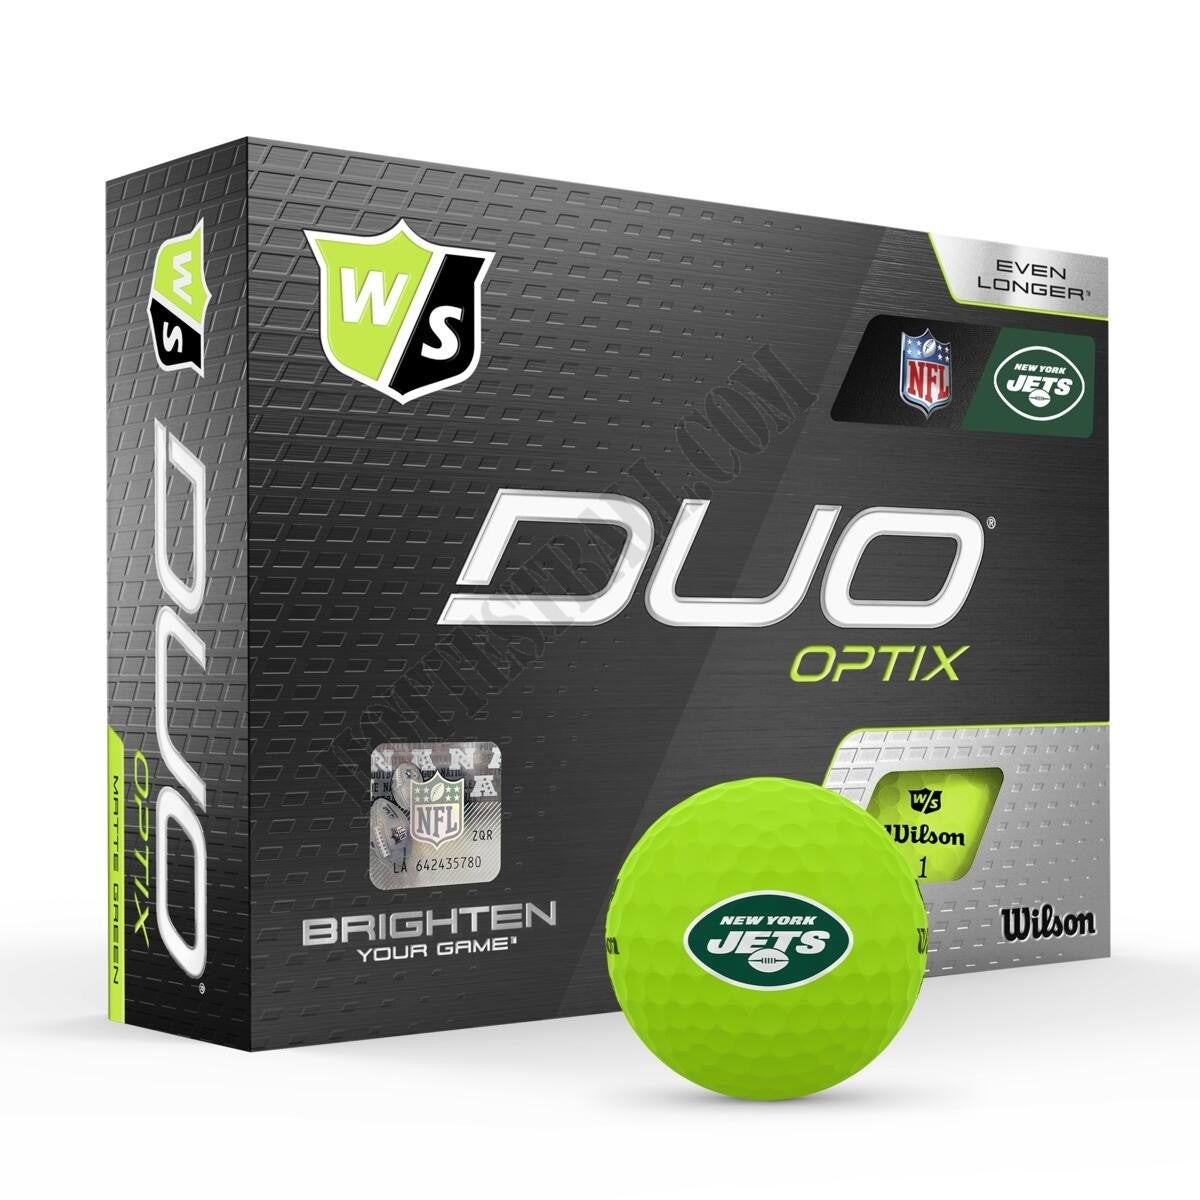 Duo Optix NFL Golf Balls - New York Jets ● Wilson Promotions - Duo Optix NFL Golf Balls - New York Jets ● Wilson Promotions